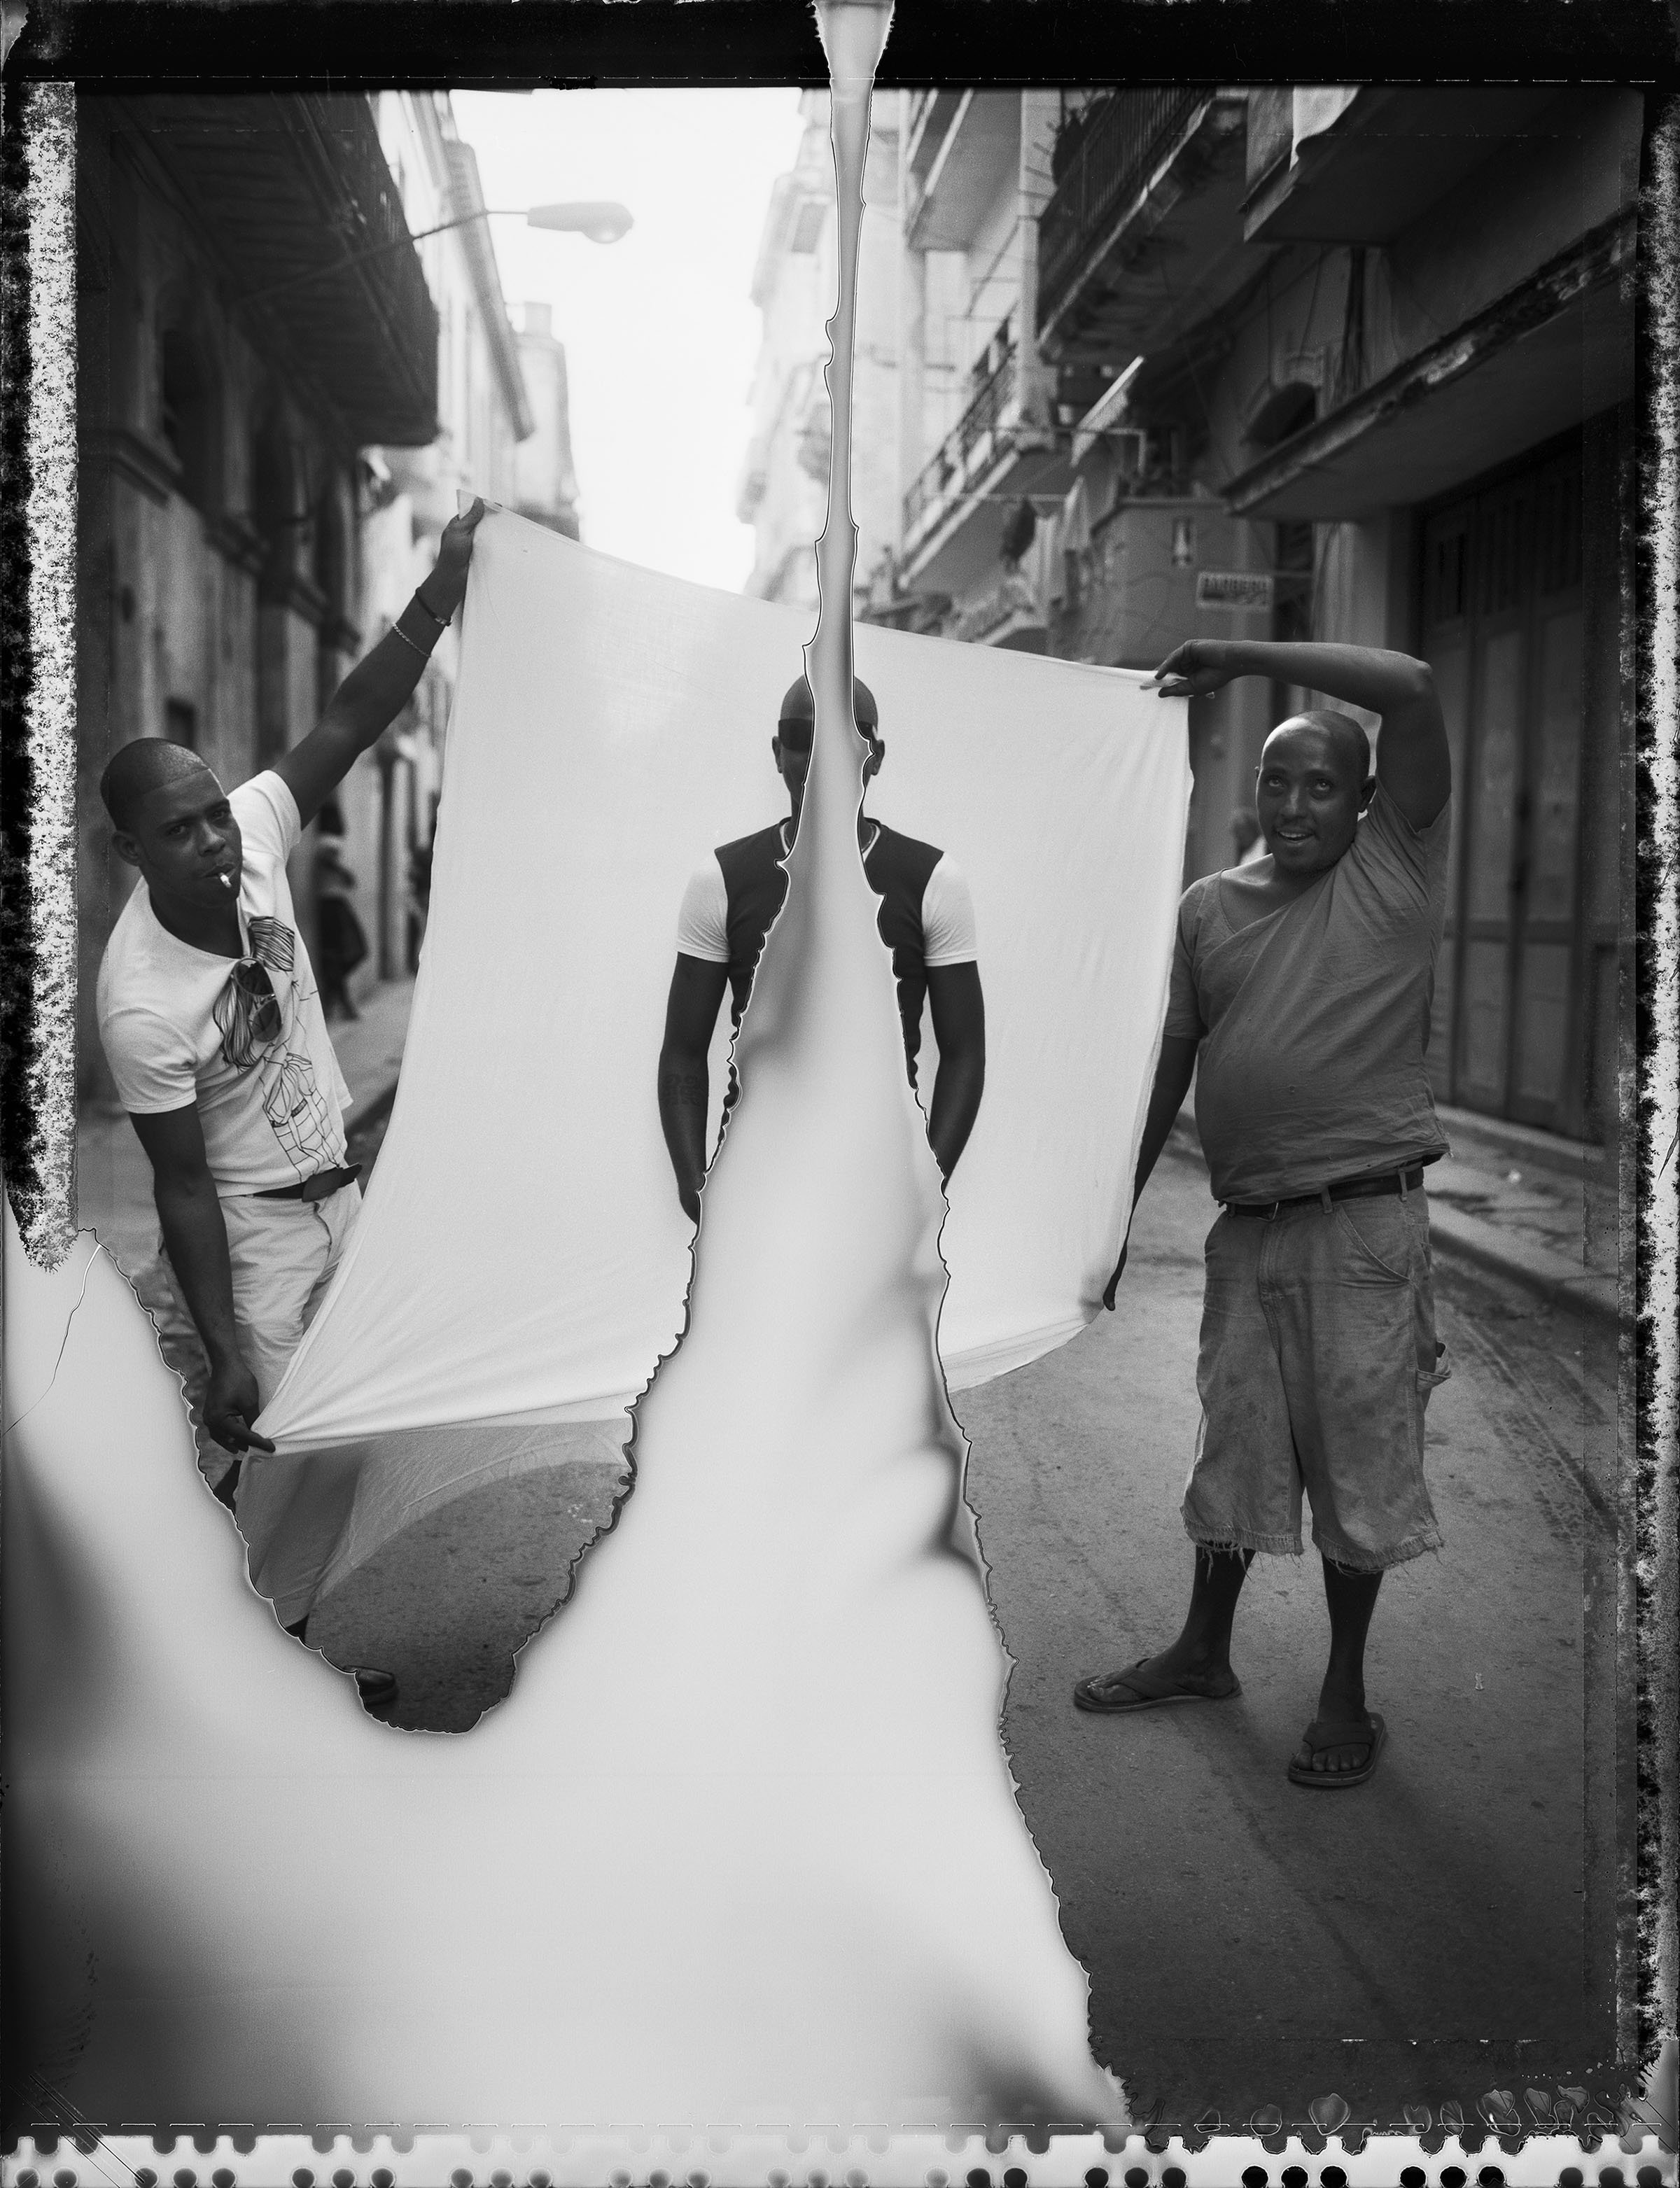 Havana, Cuba, 2012